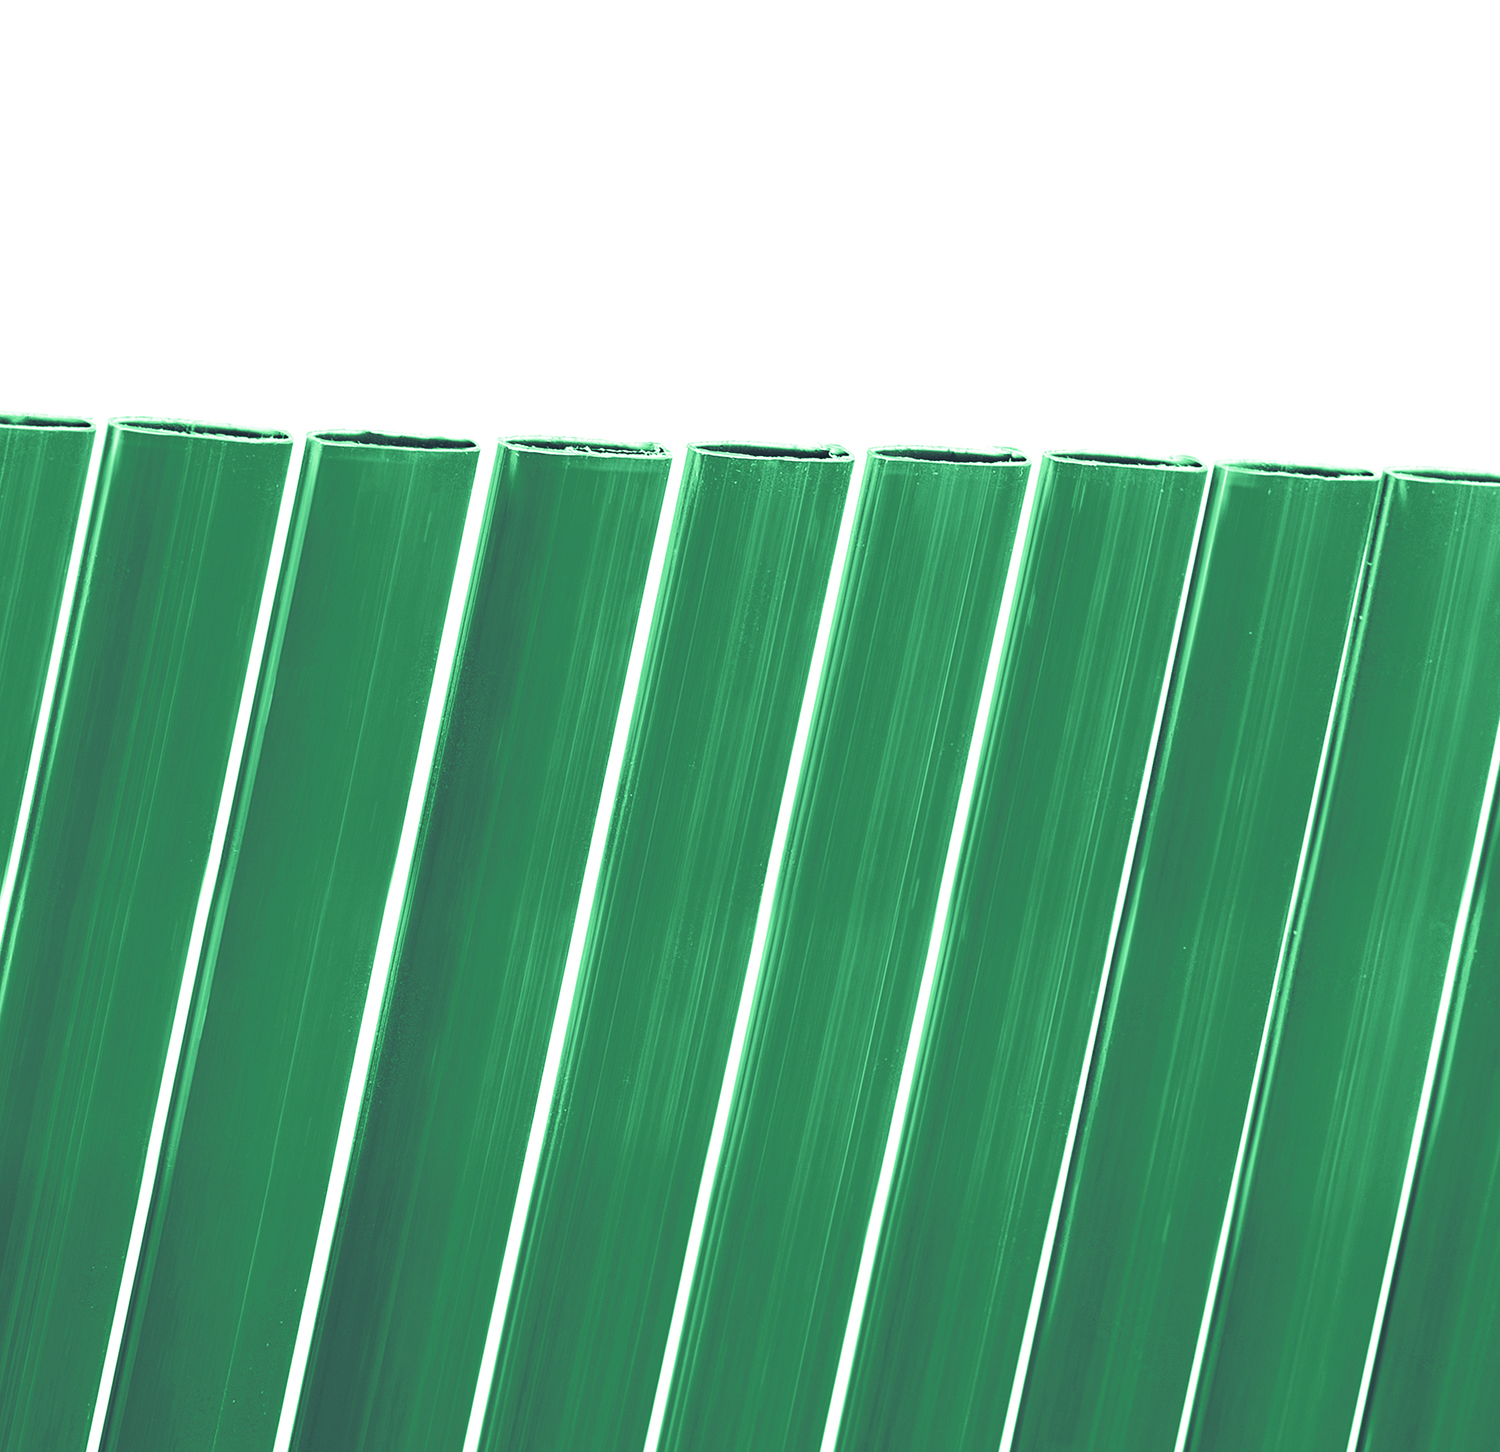 Oval plastic cane Litecane PVC green 1x3 m